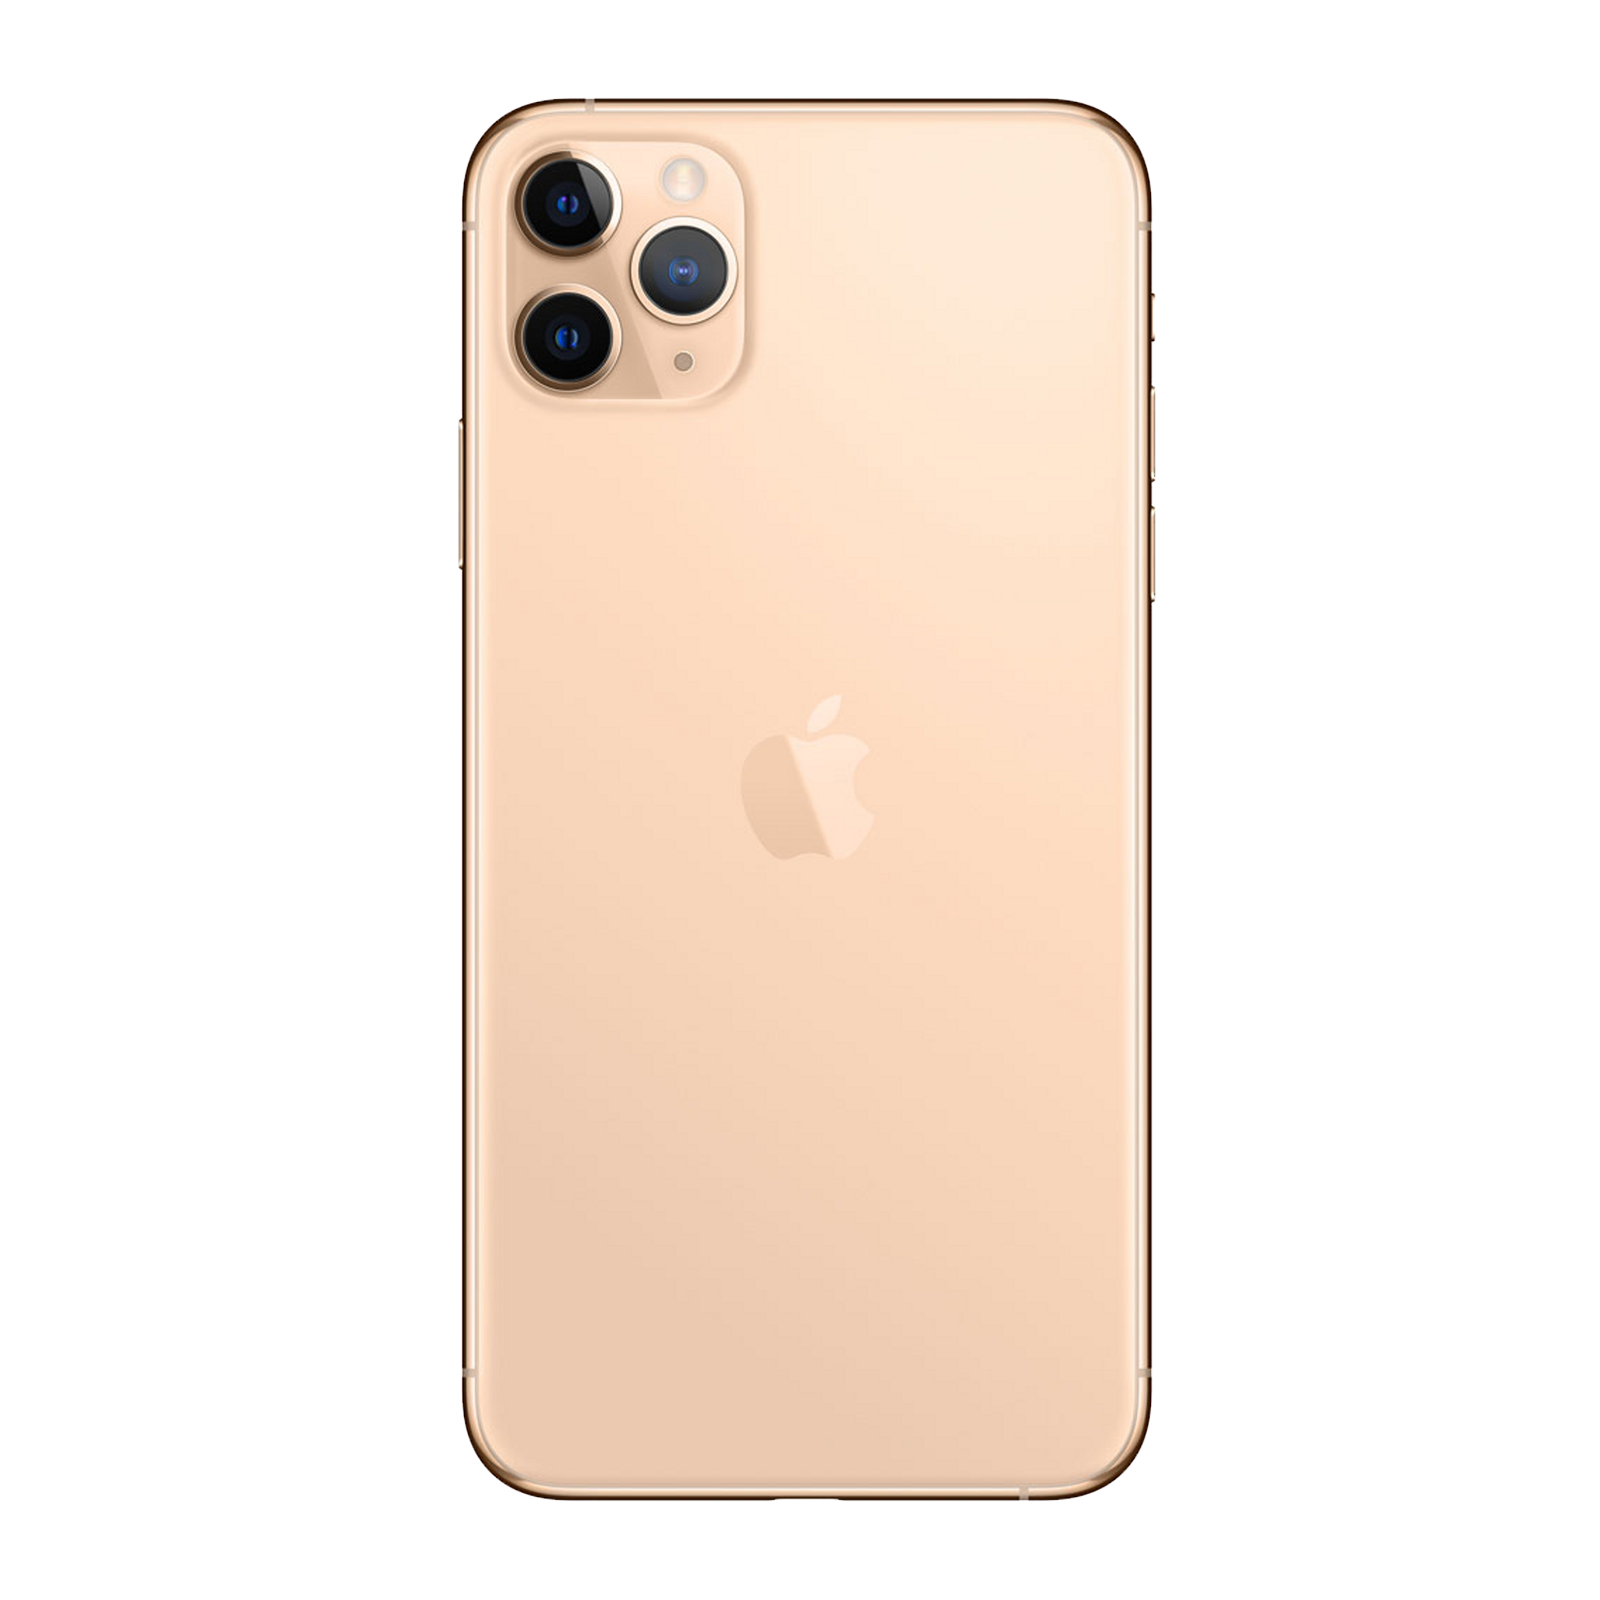 Apple iPhone 11 Pro 256GB Gold Fair - Unlocked